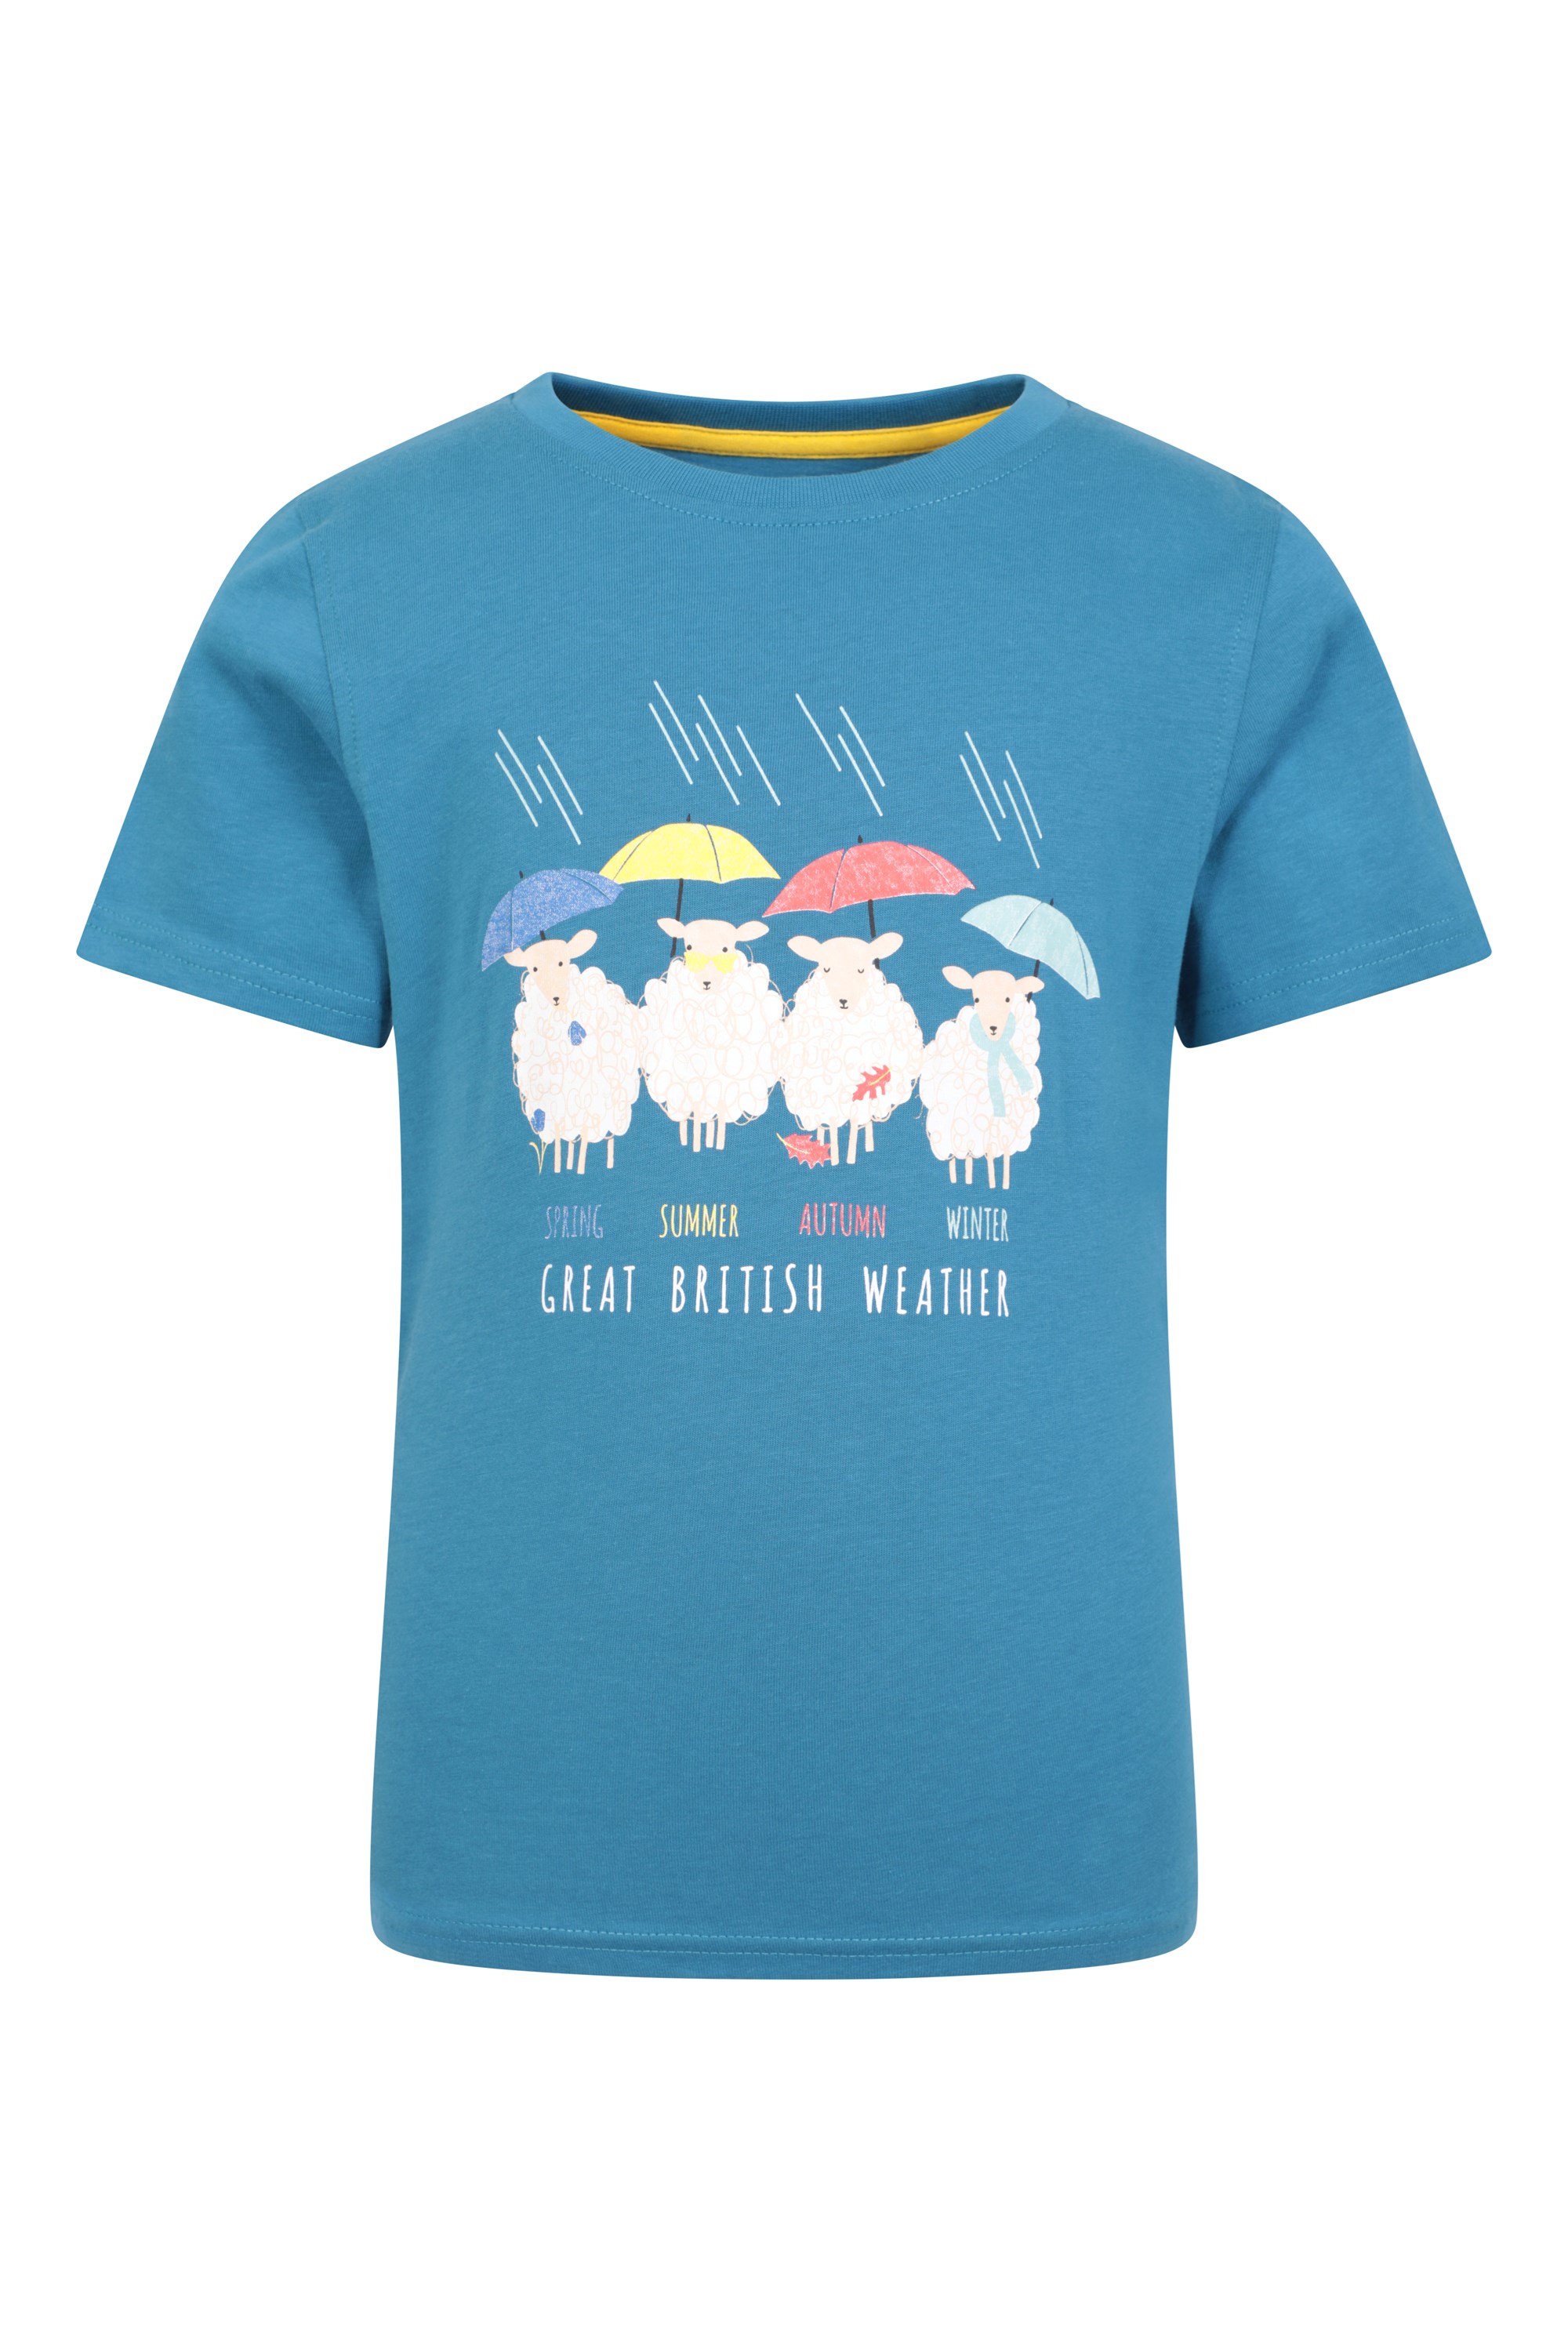 British Weather Kids Organic T-Shirt - Turquoise